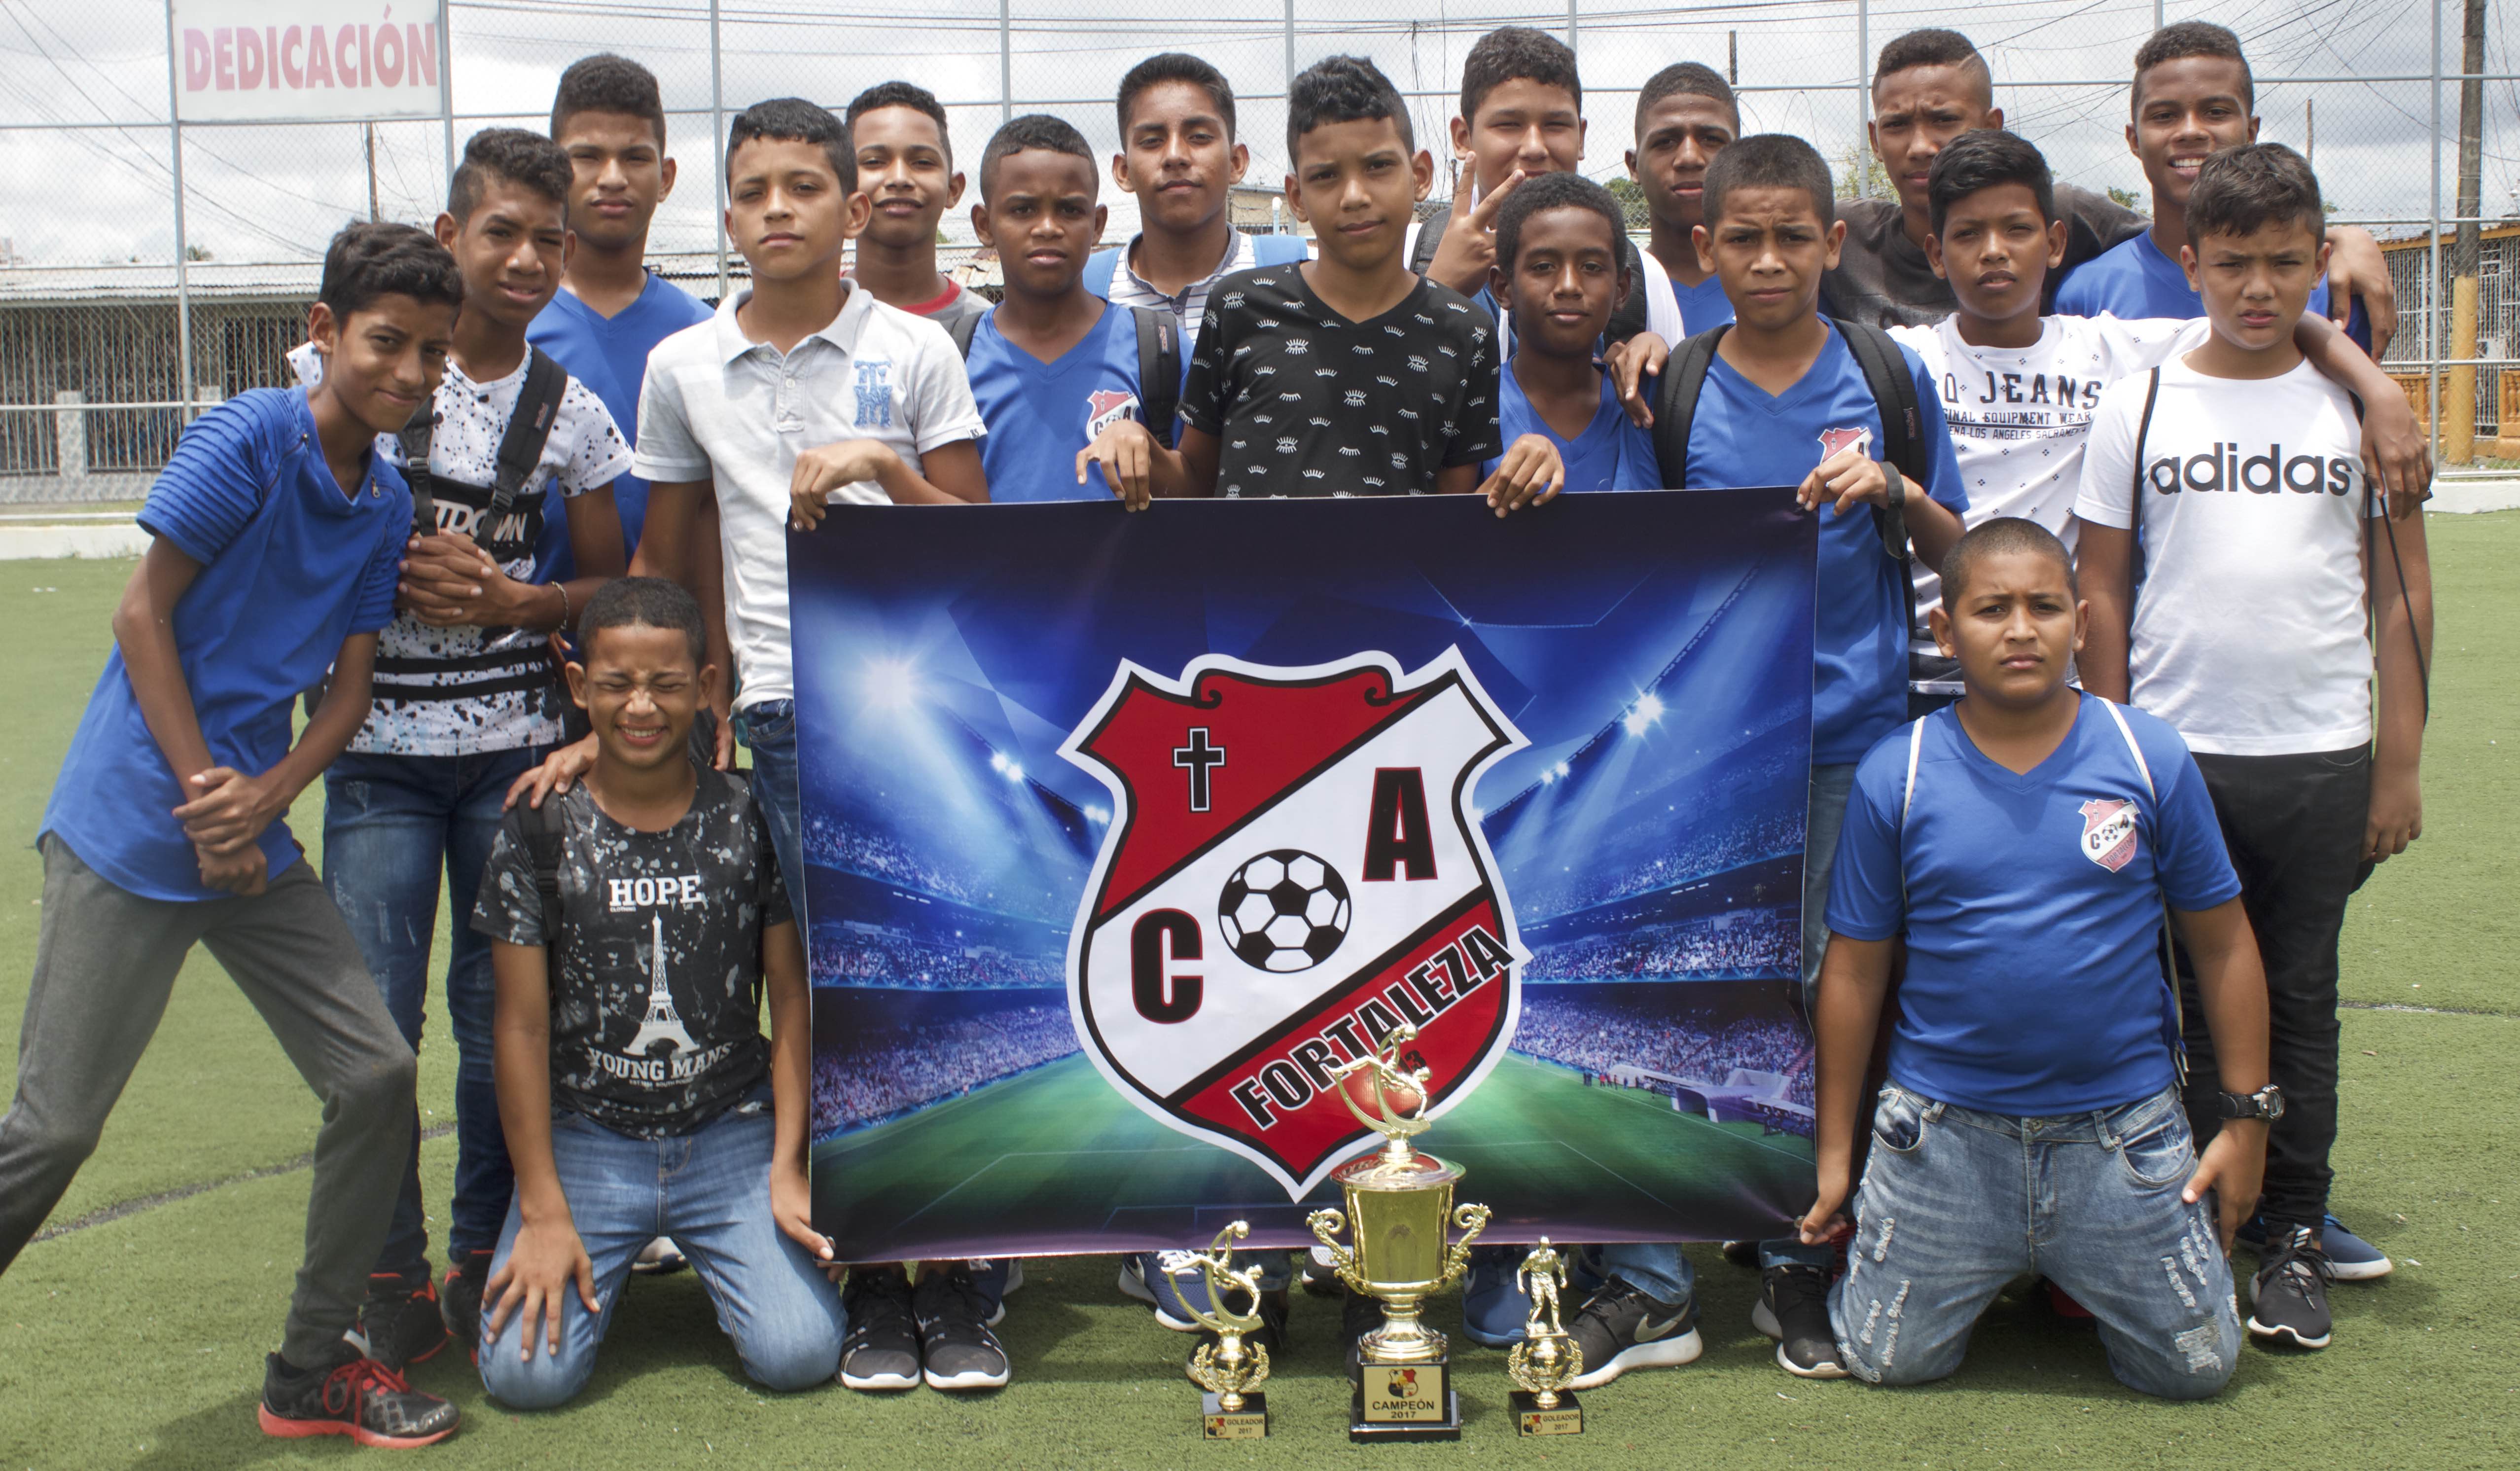 CAF - Club Atlético Fortaleza